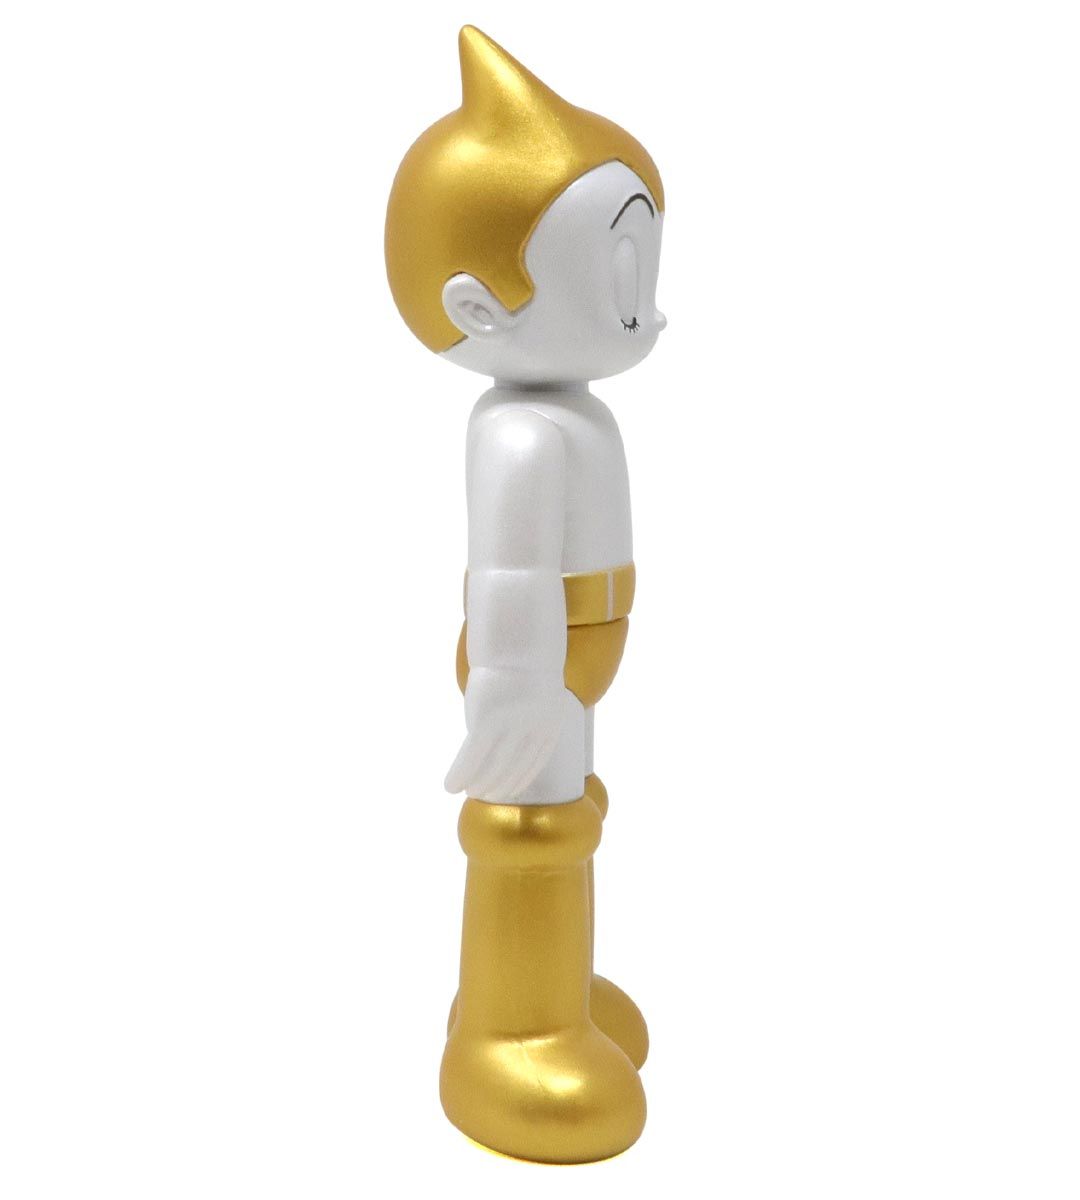 Astro Boy PVC Gold Closed Eyes vers.